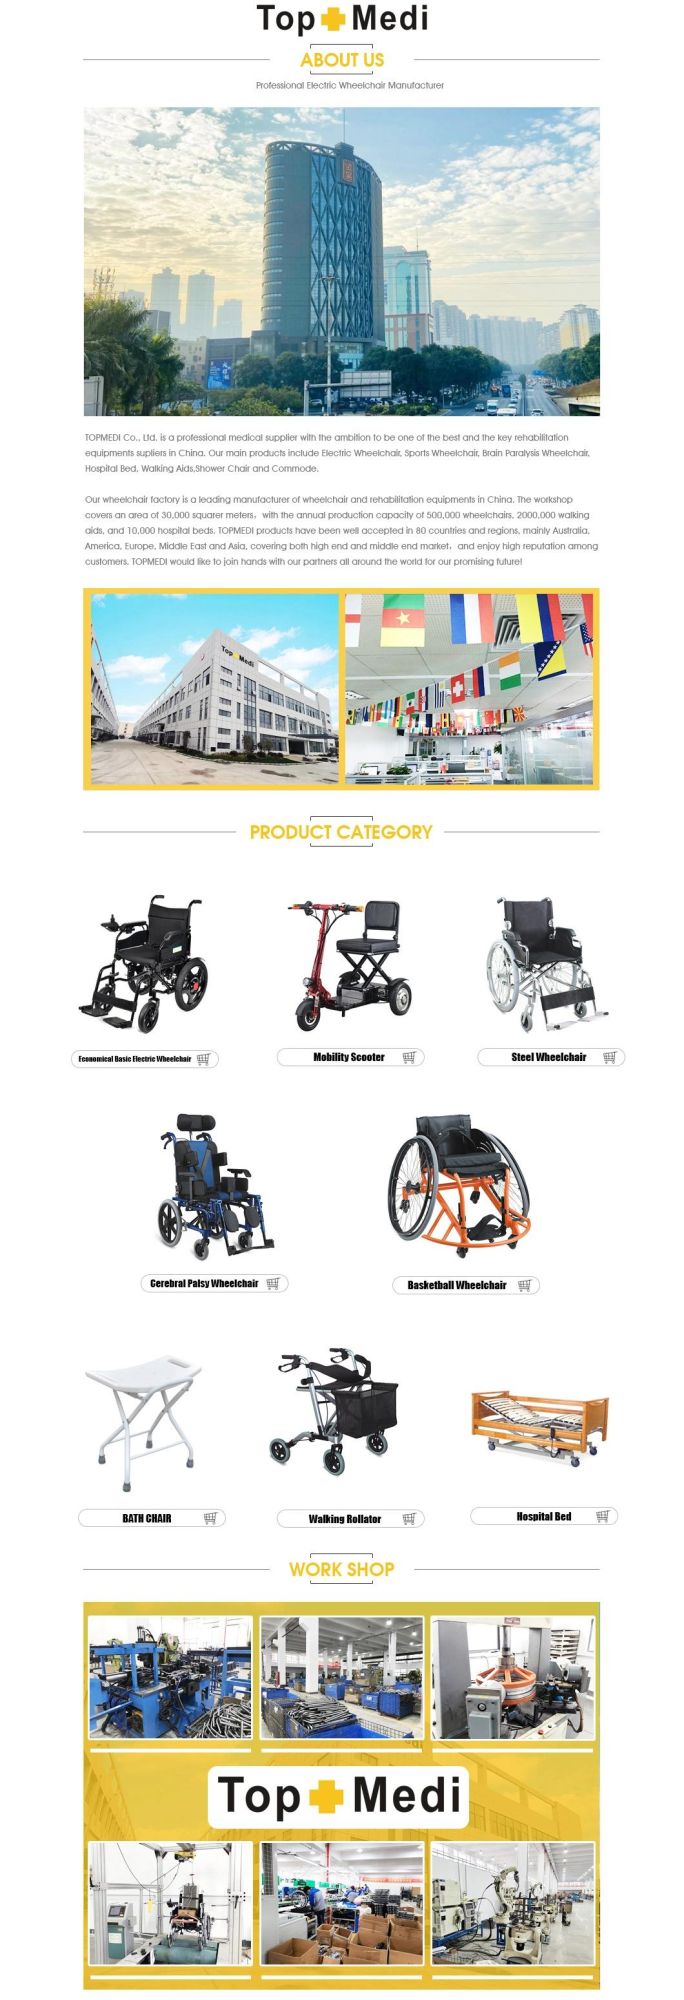 Topmedi Distributor Portable Lightweight Brush Folding Electric Wheelchair